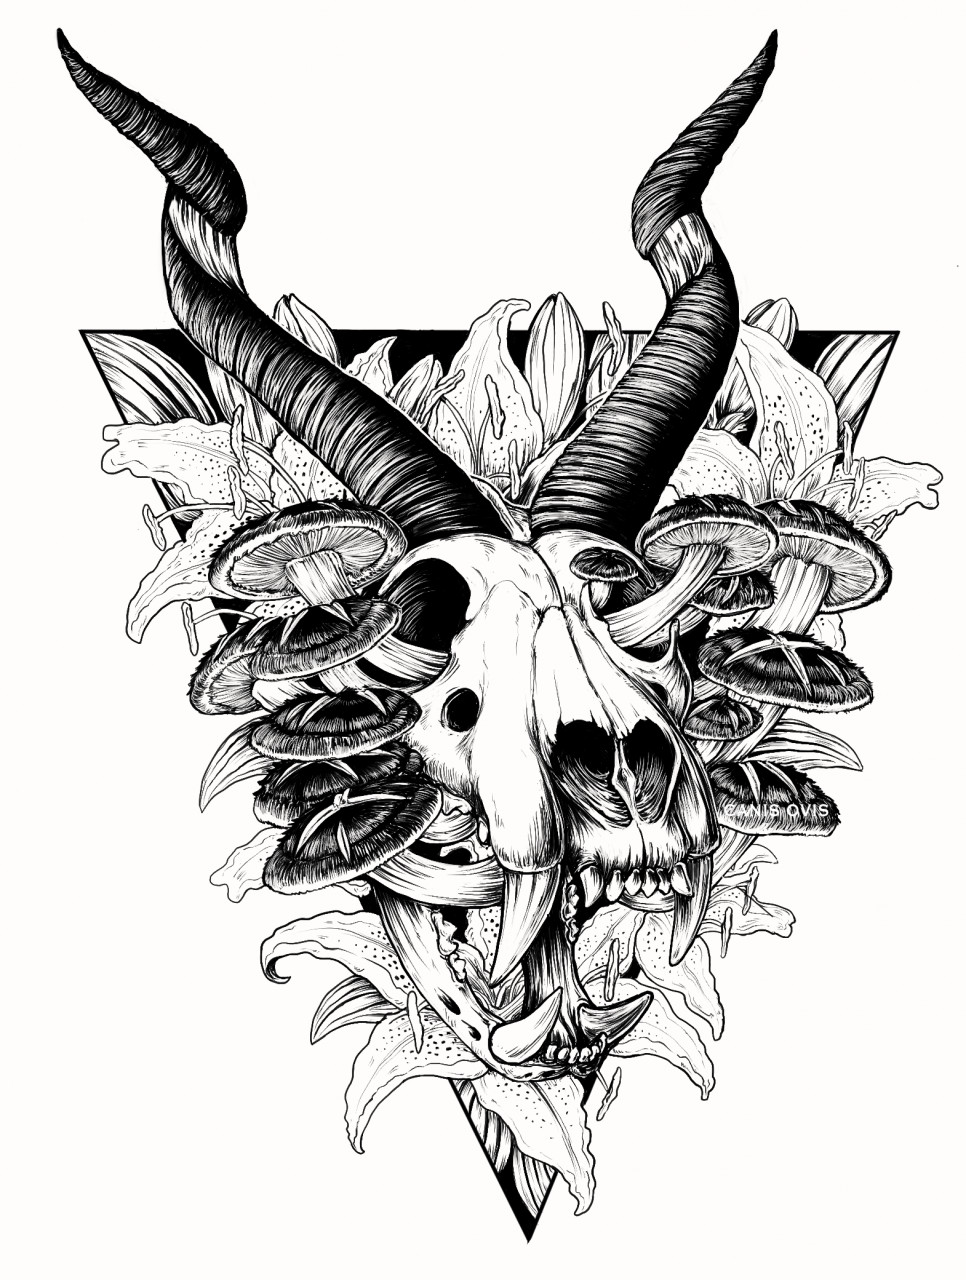 Sideshow Tattoos & Piercings - Hartbeespoort, South Africa - Kudu Skull,  Roses & Protea Tattoo | Facebook